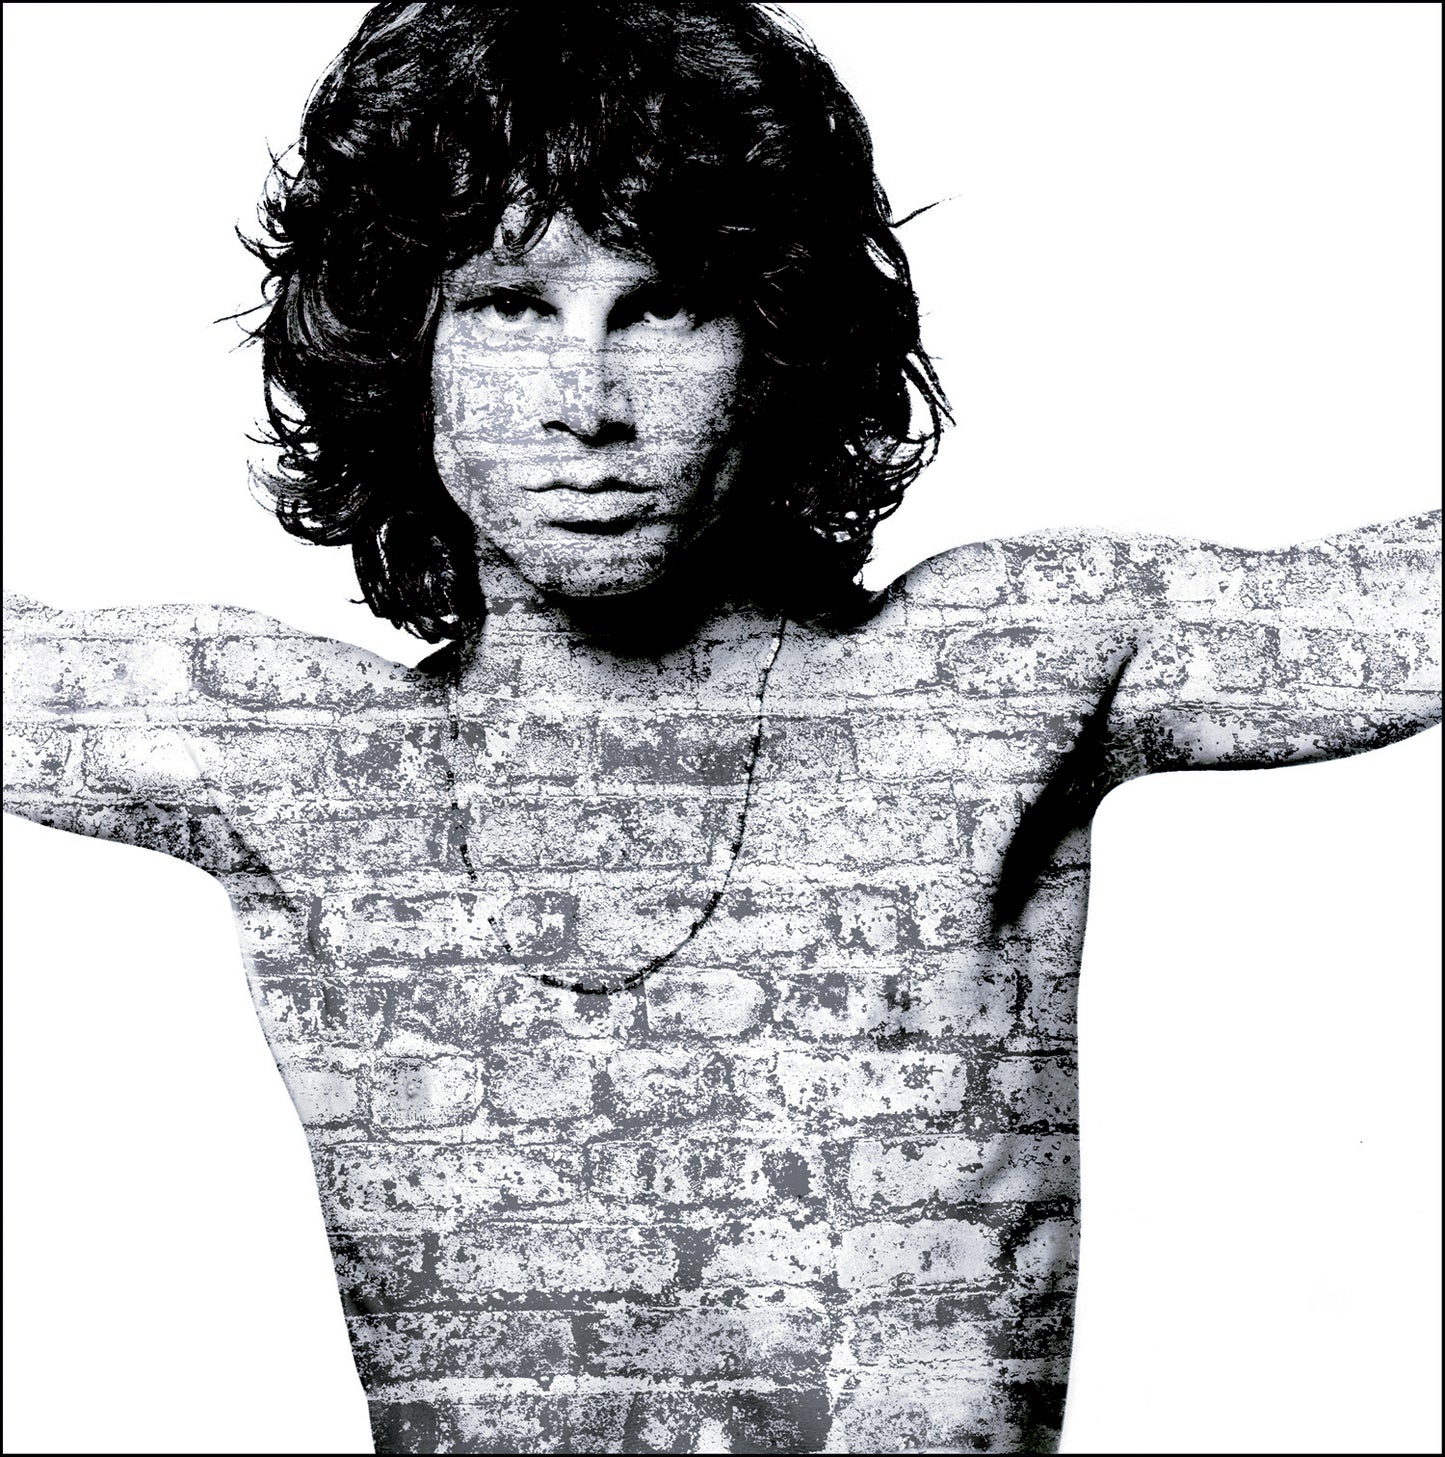 Jim Morrison, The Doors, "Unknown Soldier", New York City, 1967 by Joel Brodsky